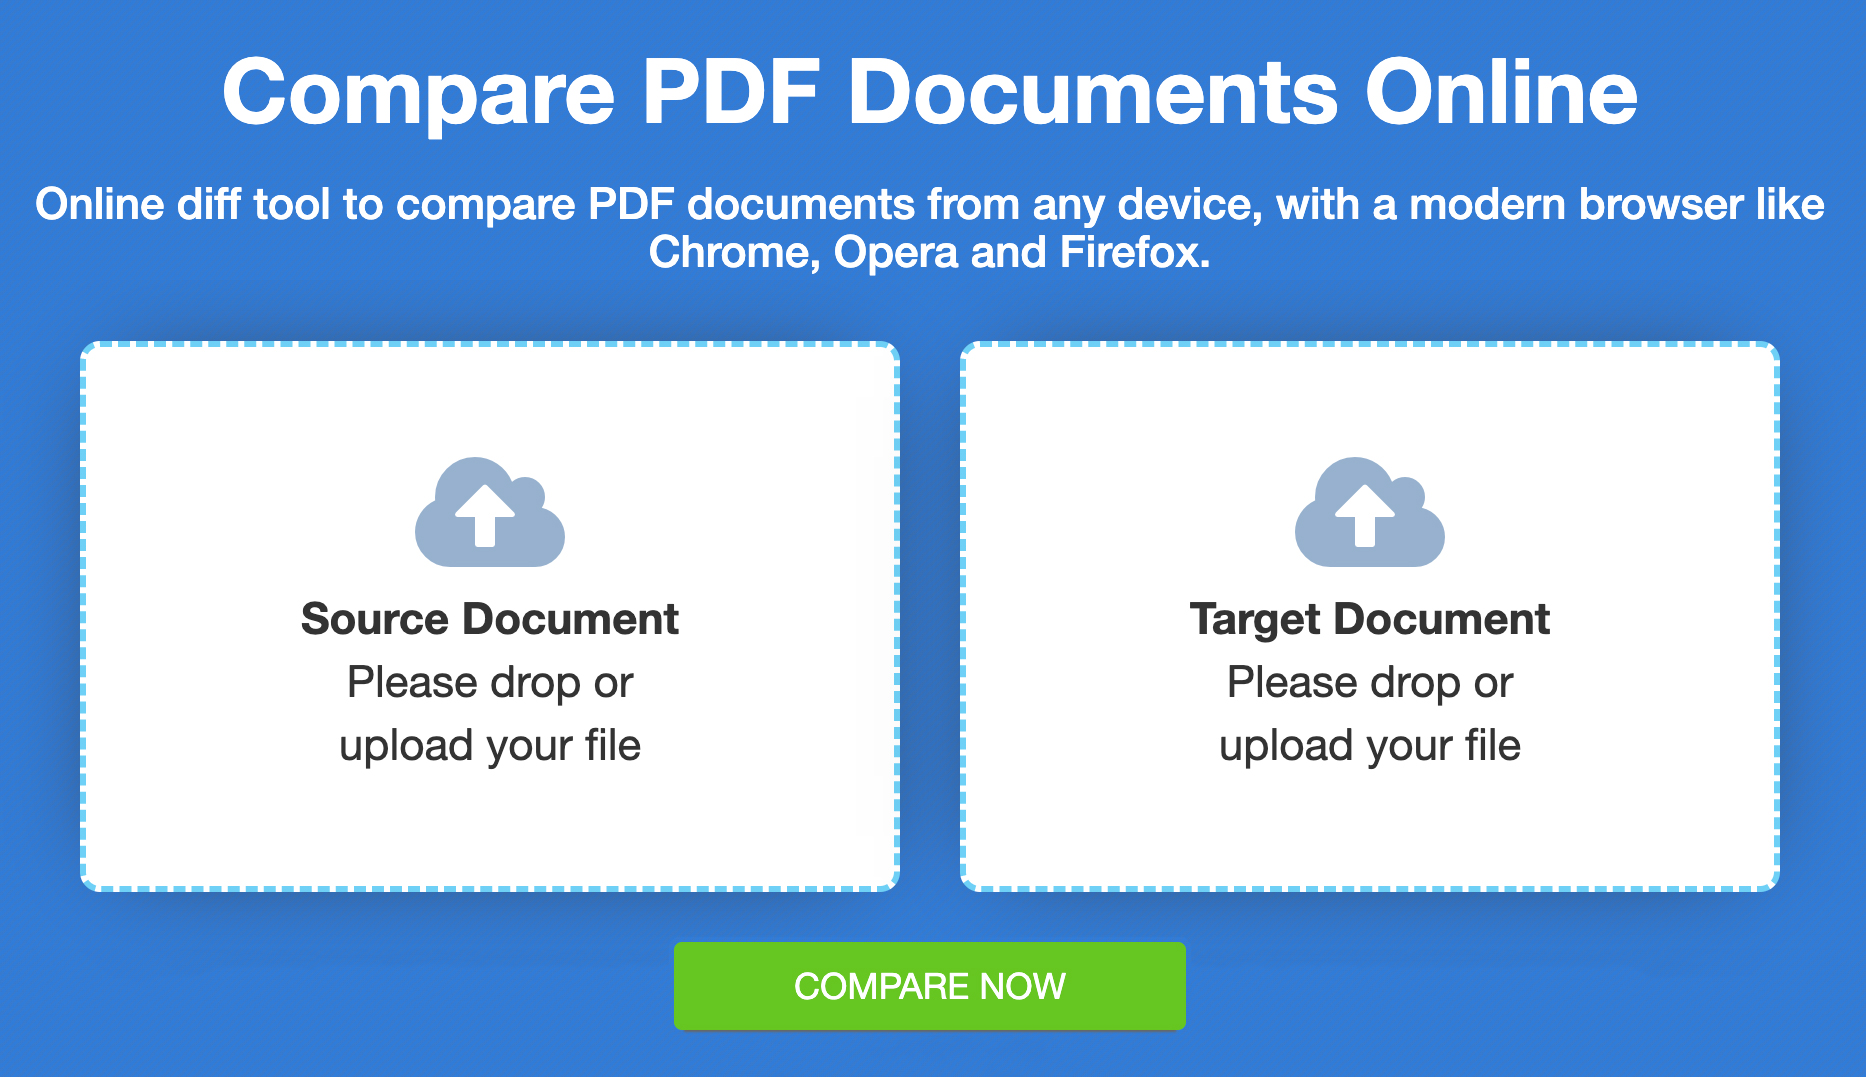 PDF ファイルを比較 - オンラインで無料比較